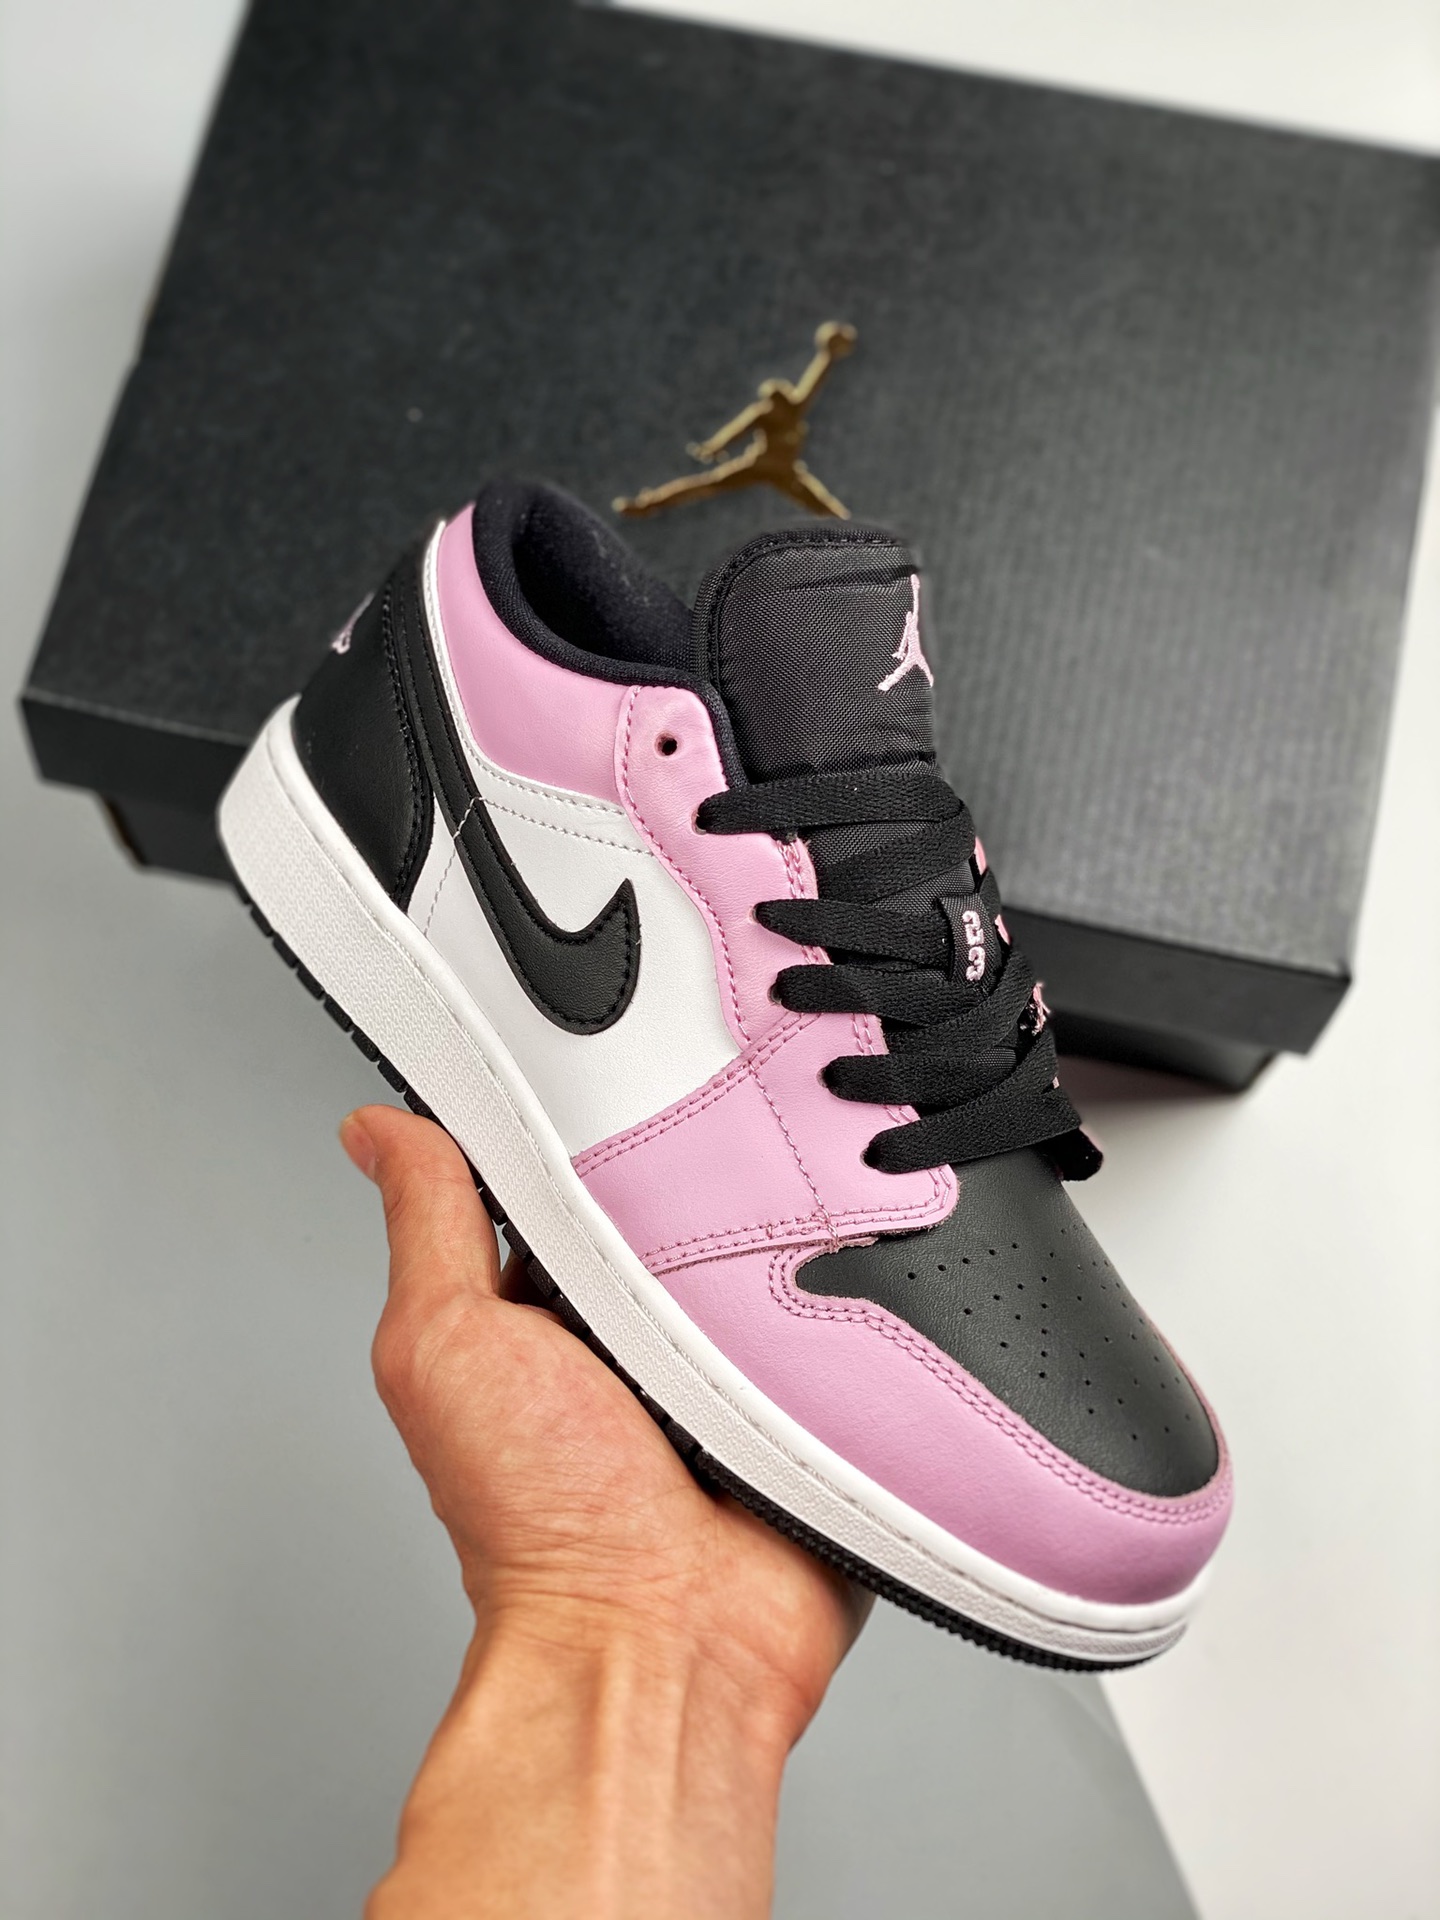 Air Jordan 1 Low Light Arctic Pink/Black/White For Sale â Sneaker Hello